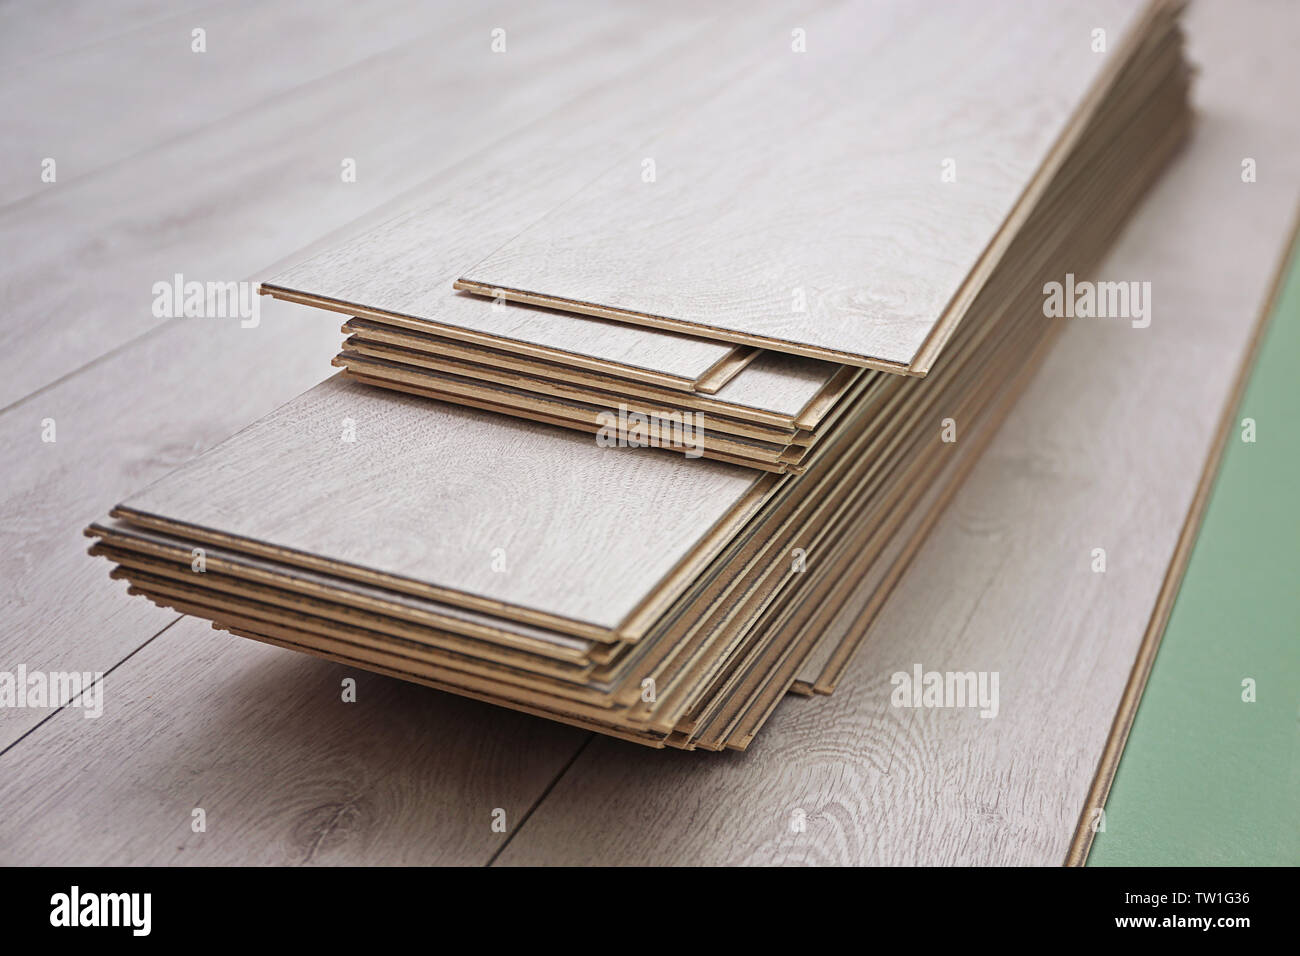 Wooden panels on new laminated flooring Stock Photo